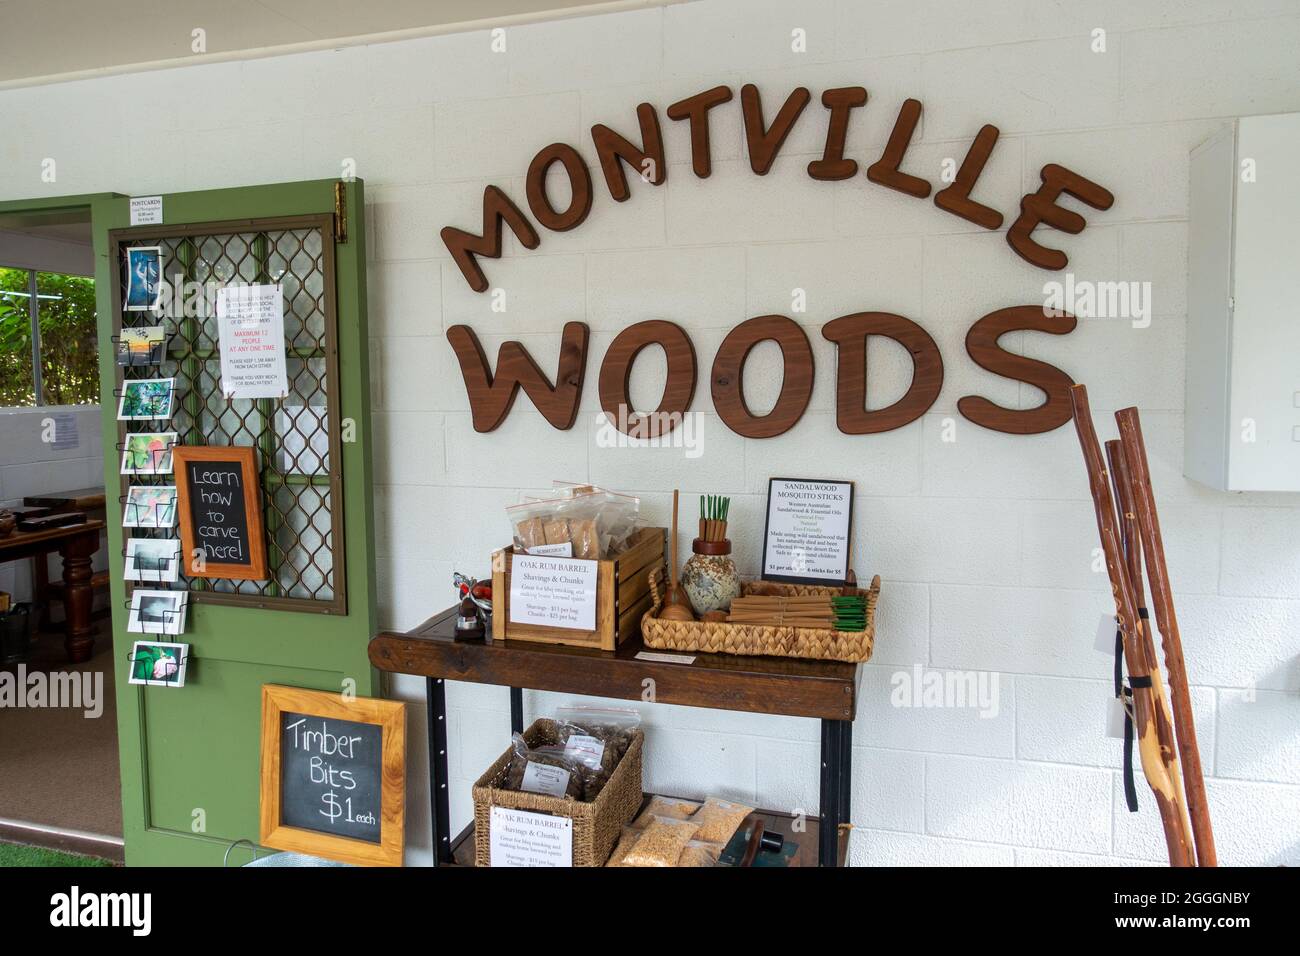 Montville Woods Tourist Shop, Queensland Australia. Stock Photo